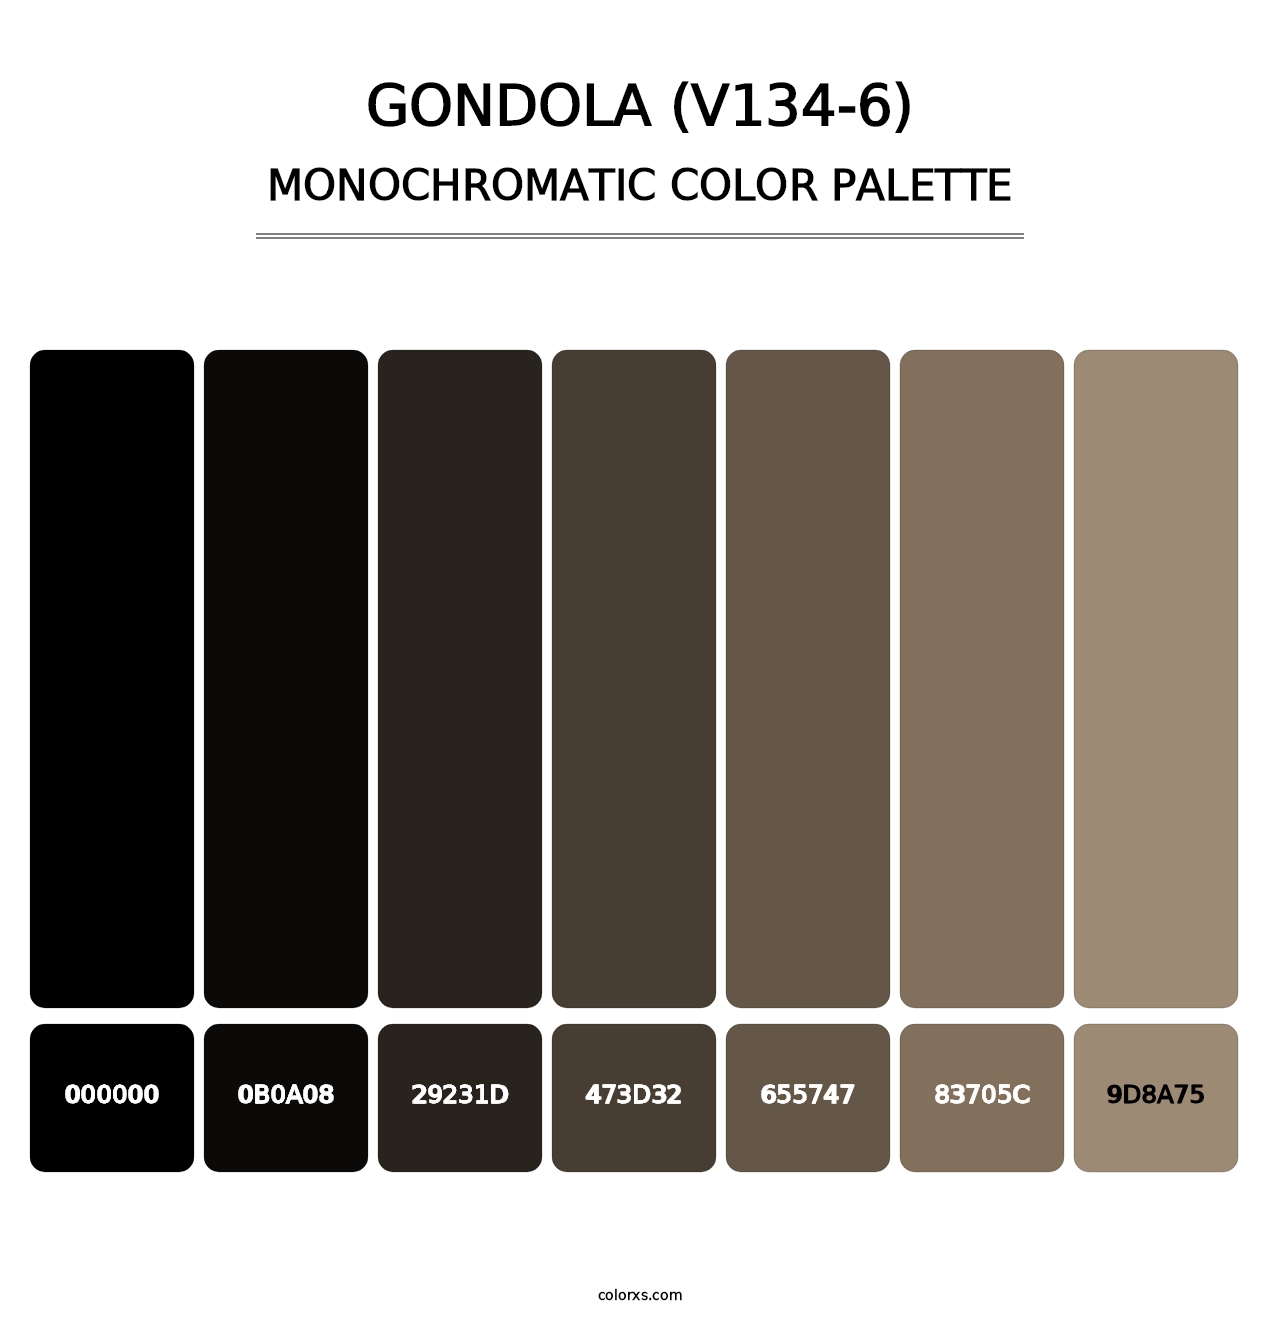 Gondola (V134-6) - Monochromatic Color Palette